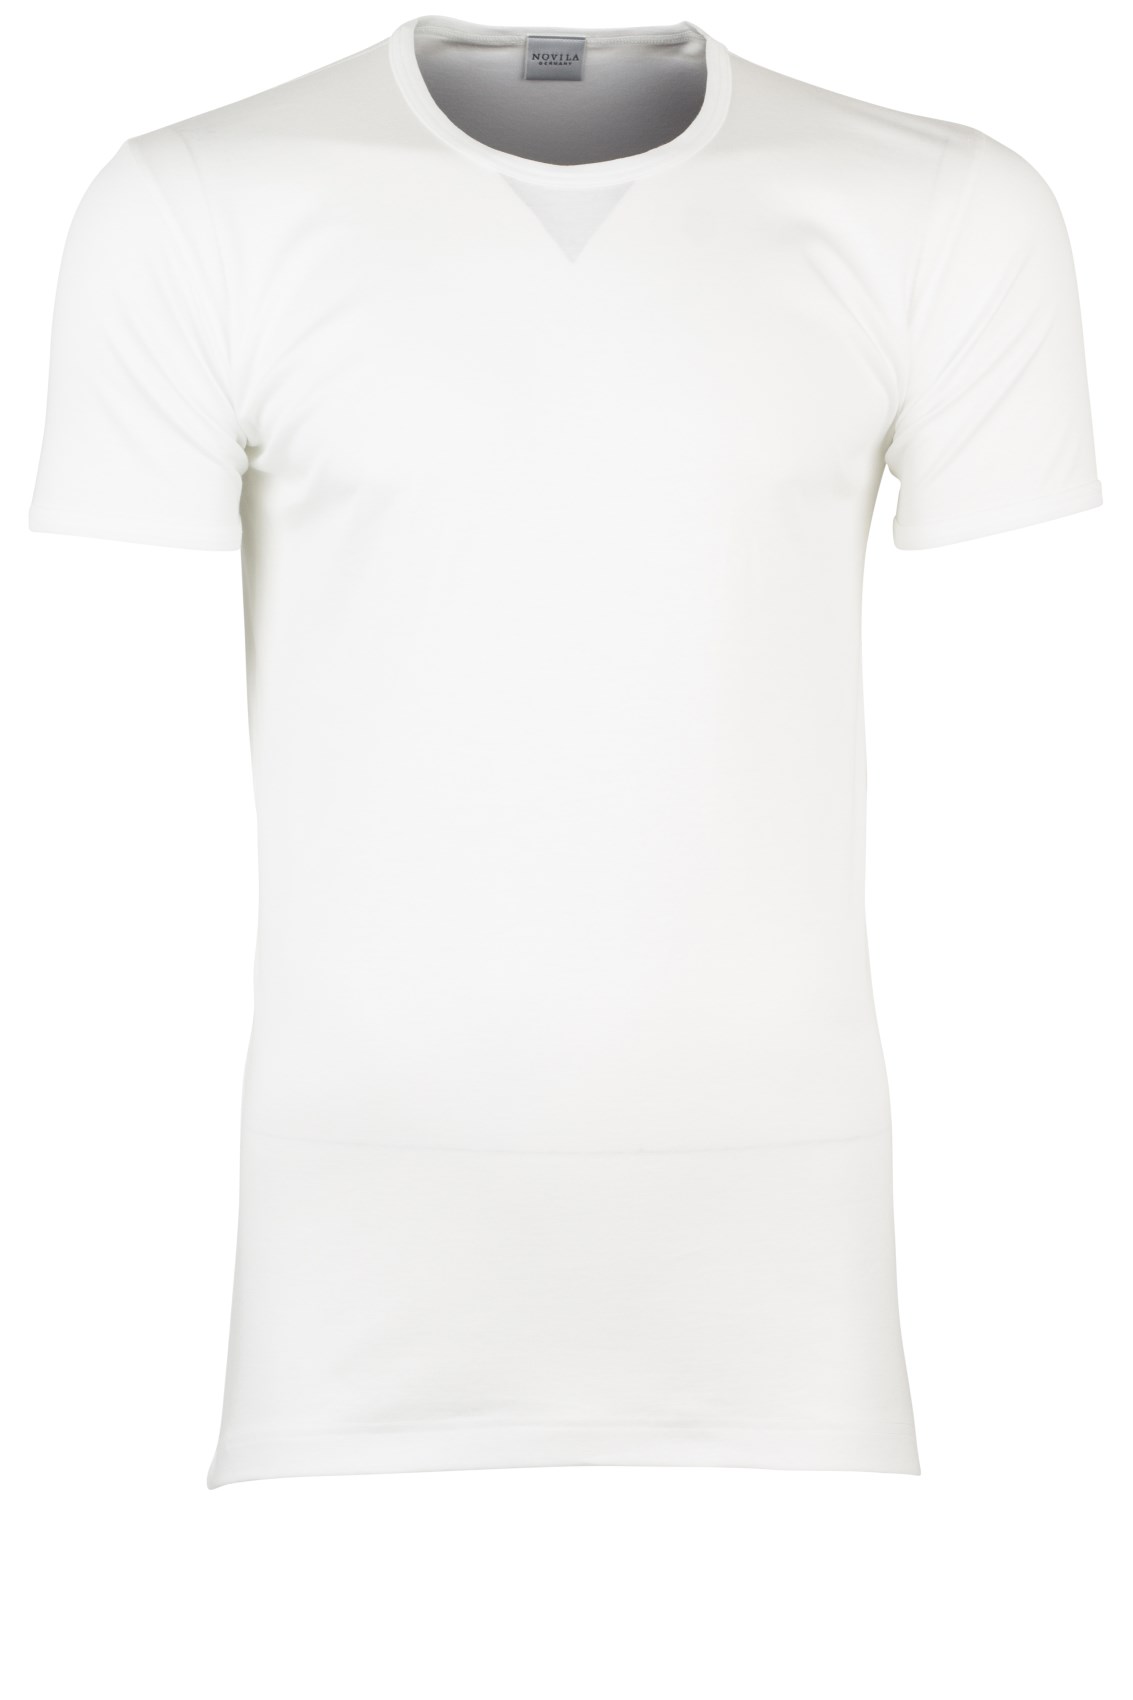 Novila t-shirt wit effen katoen